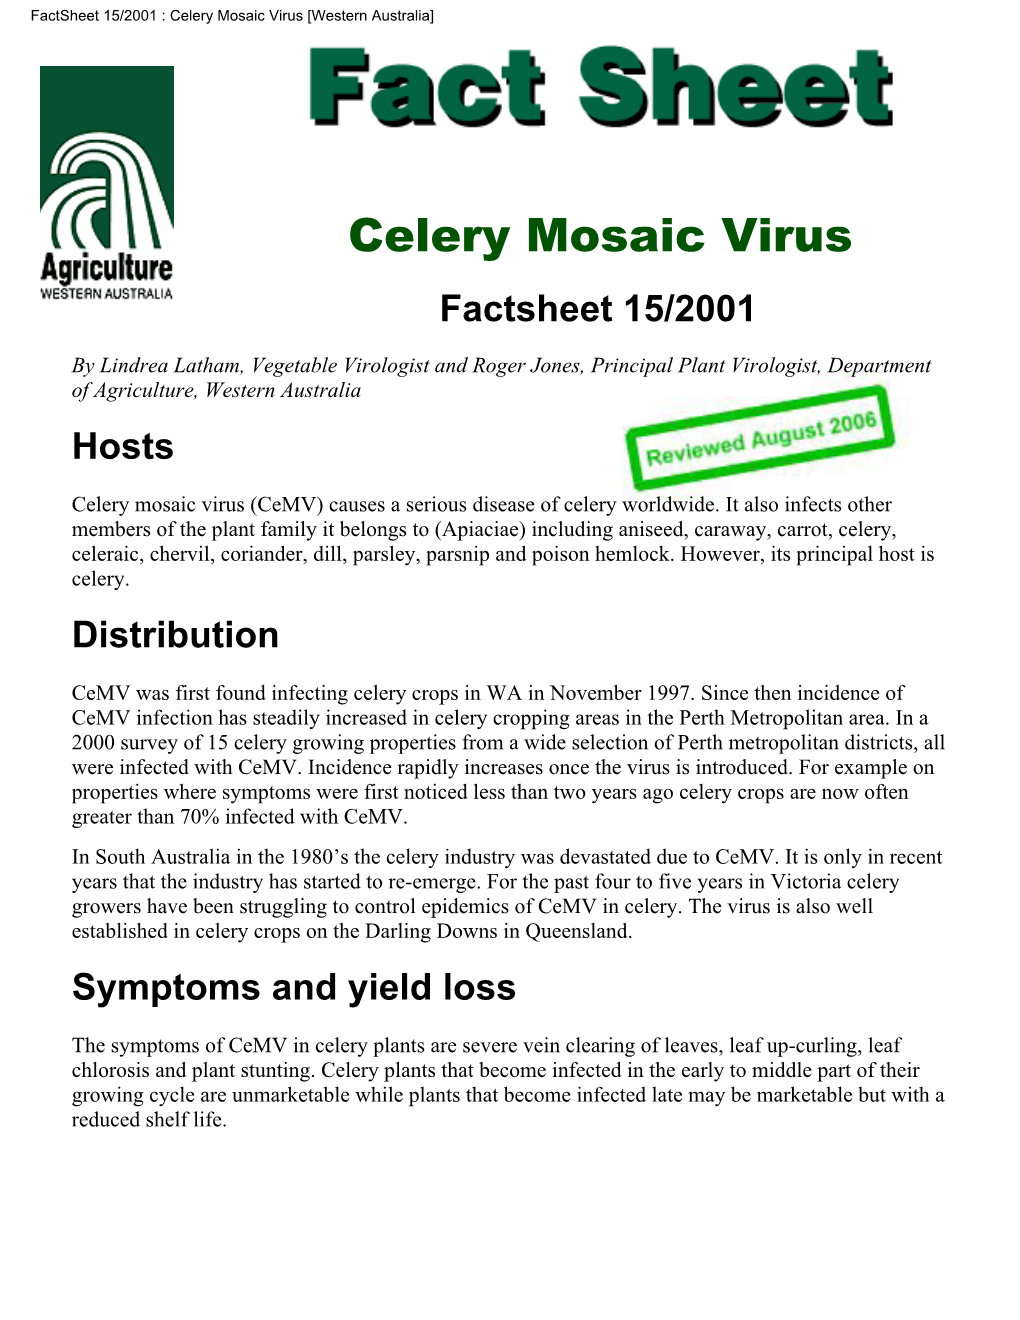 Celery Mosaic Virus [Western Australia]